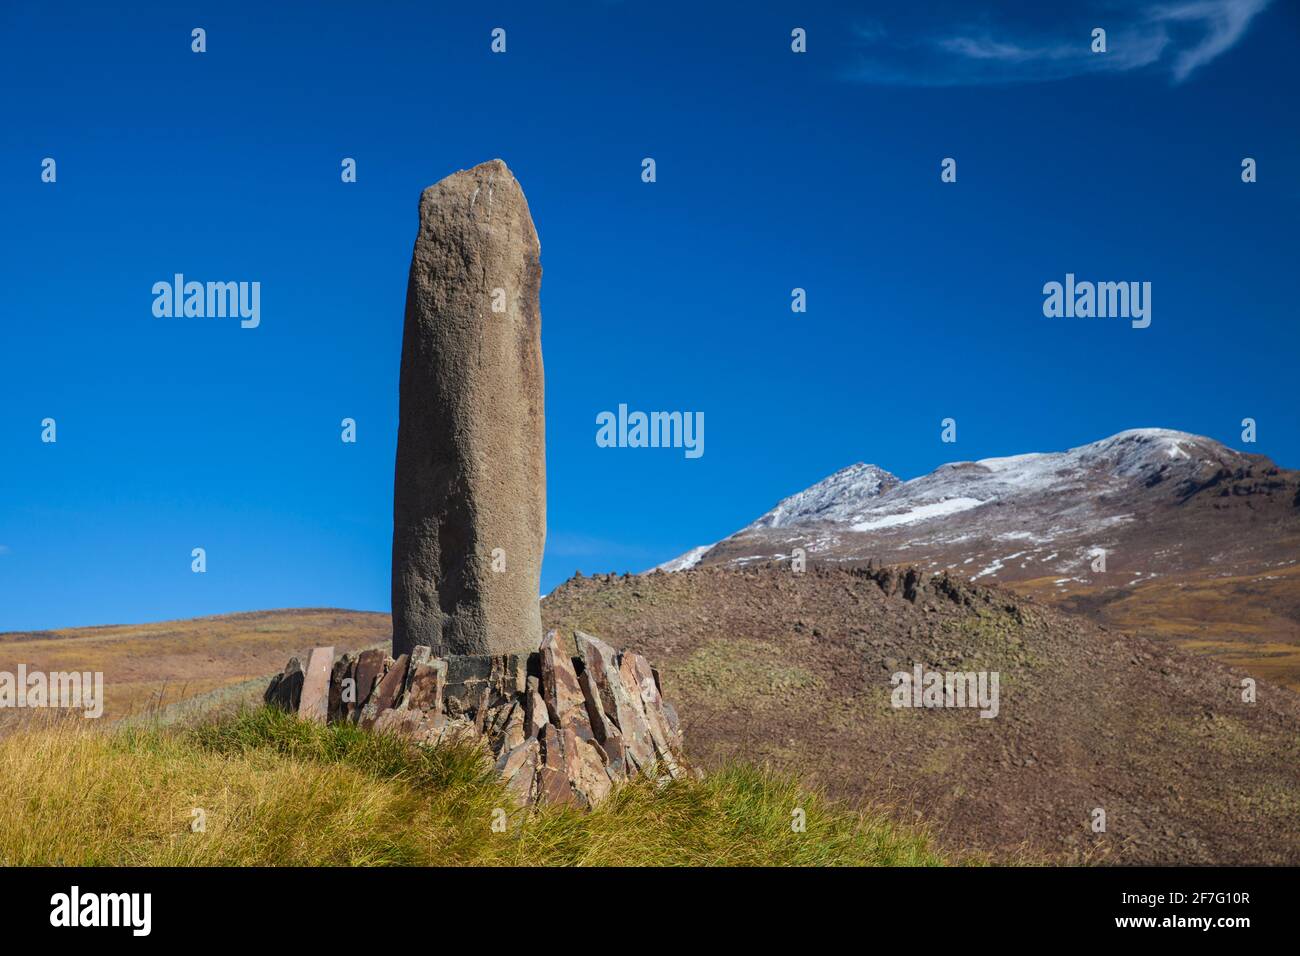 Armenia, Aragatsotn, piedra fálica en Kari lago situado en la base del monte Aragats Foto de stock